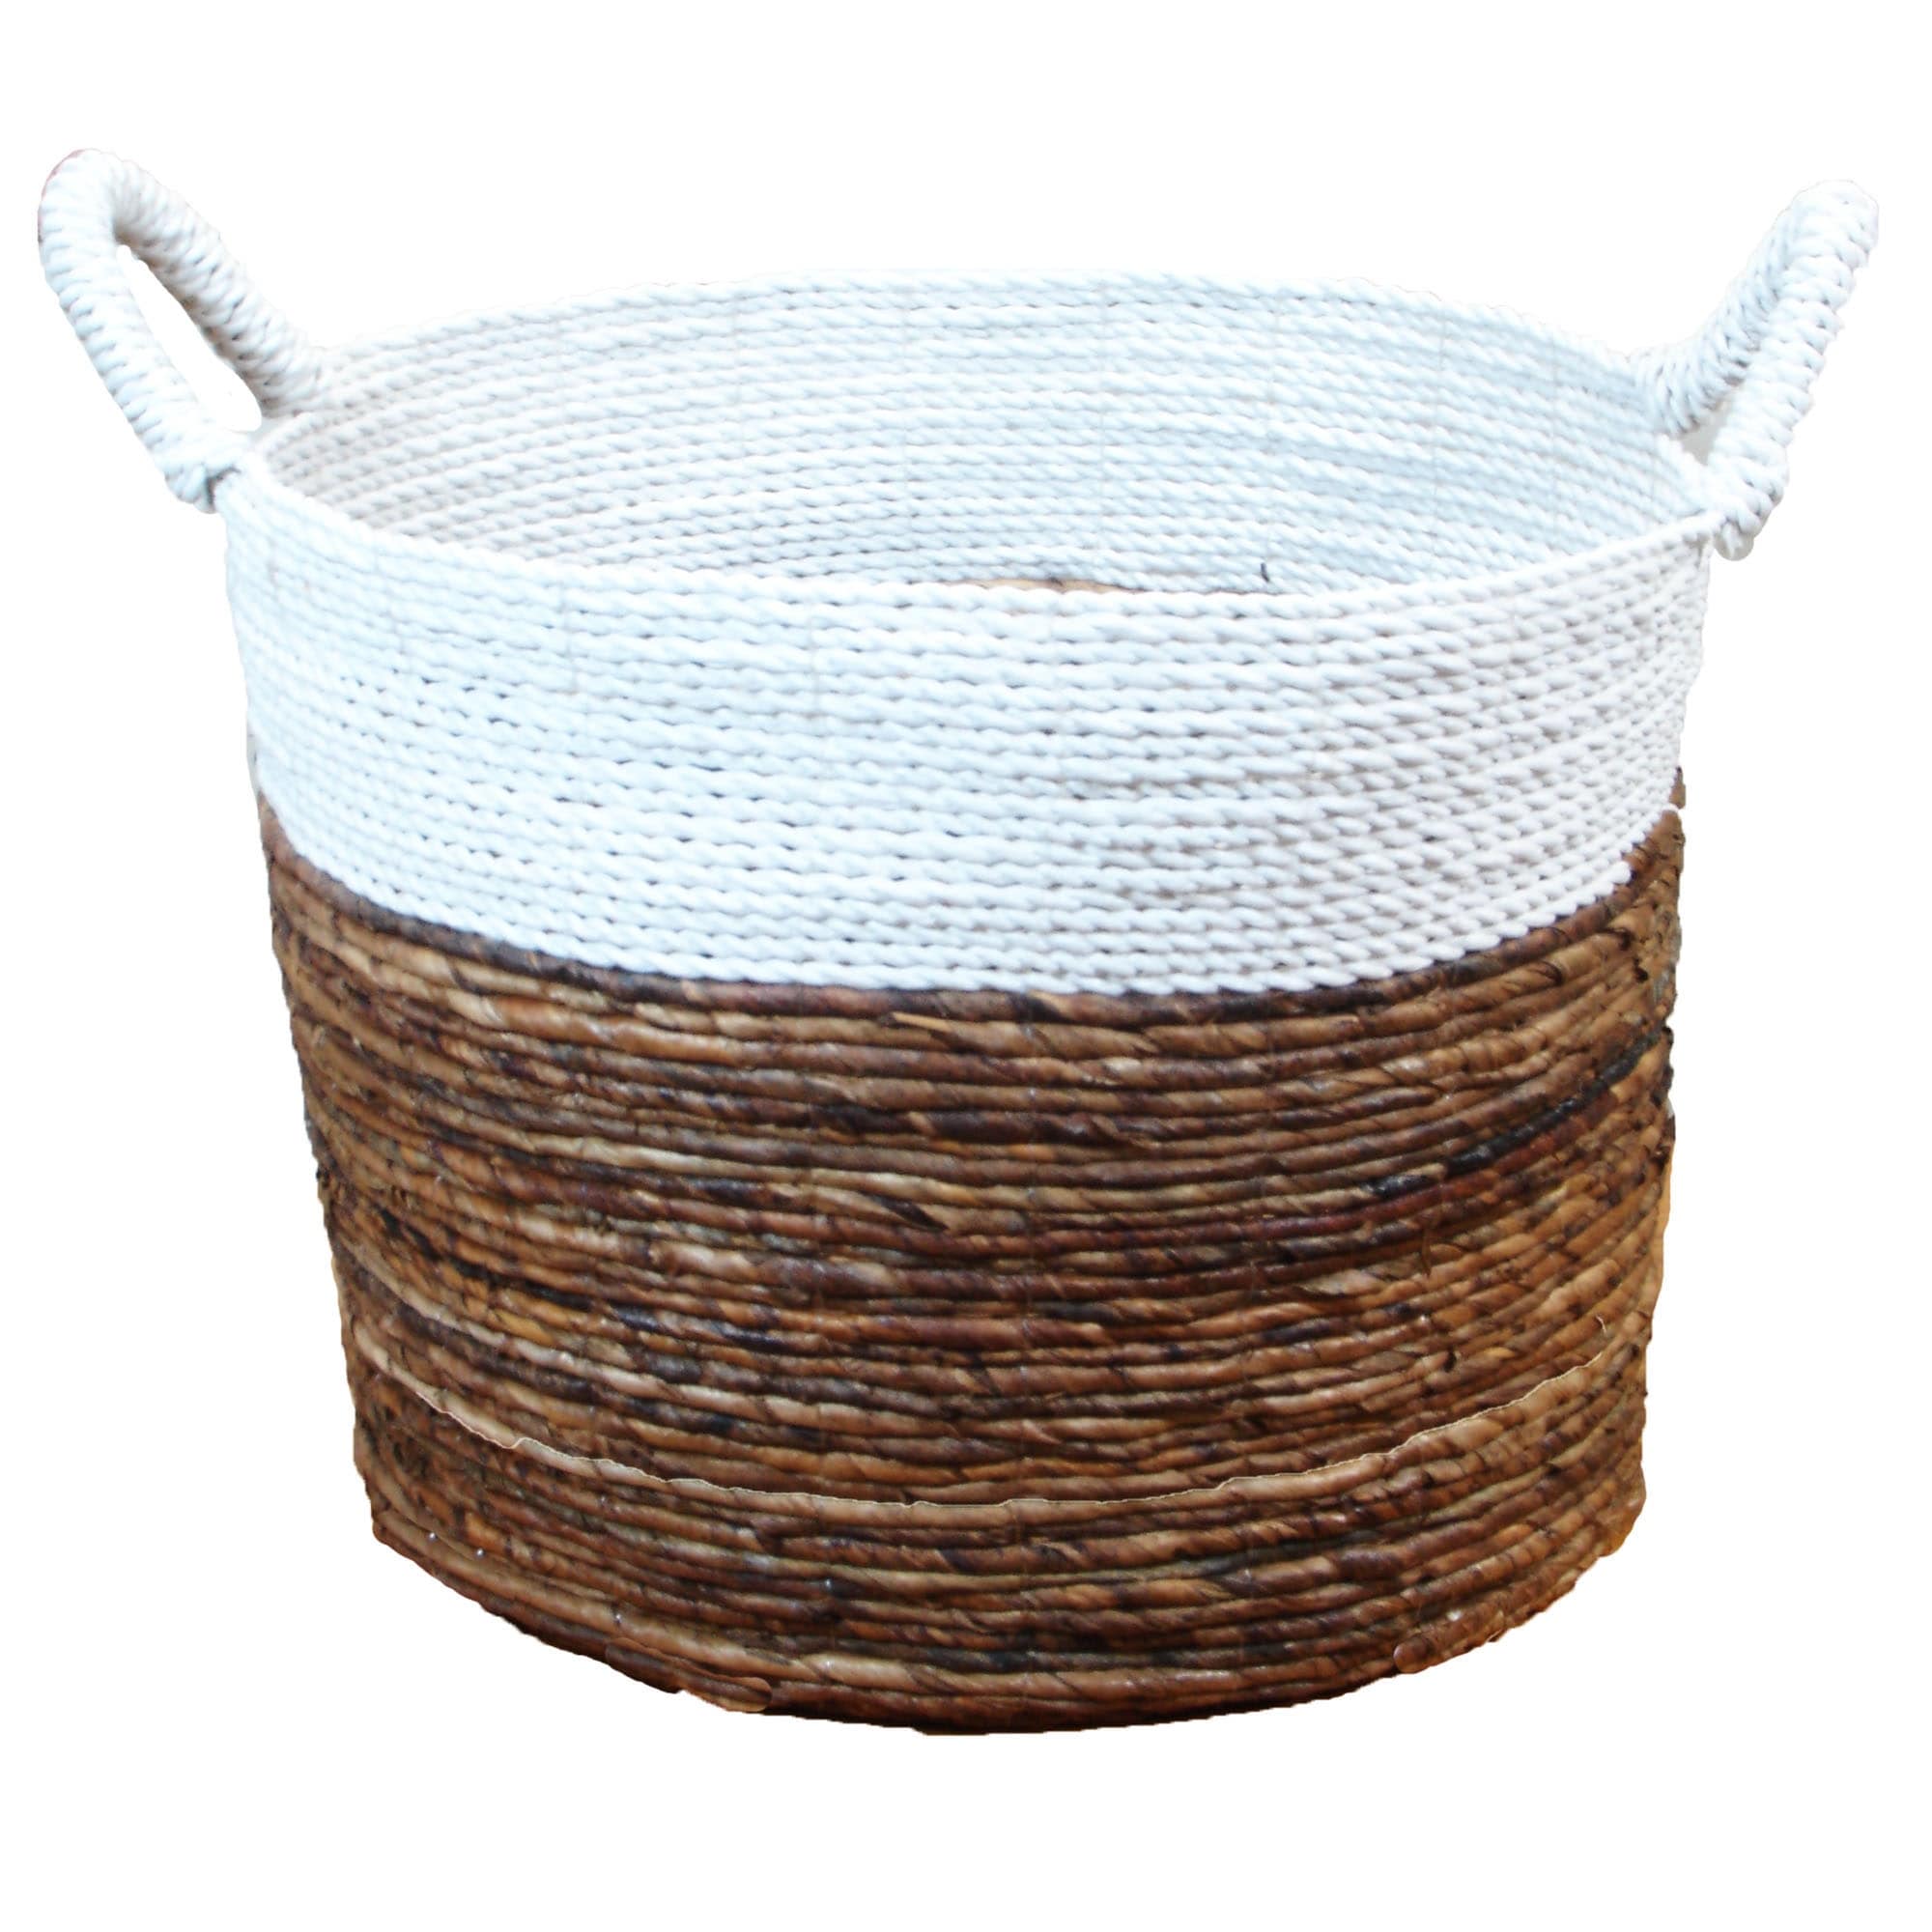 Wicker Baskets - Bed Bath & Beyond